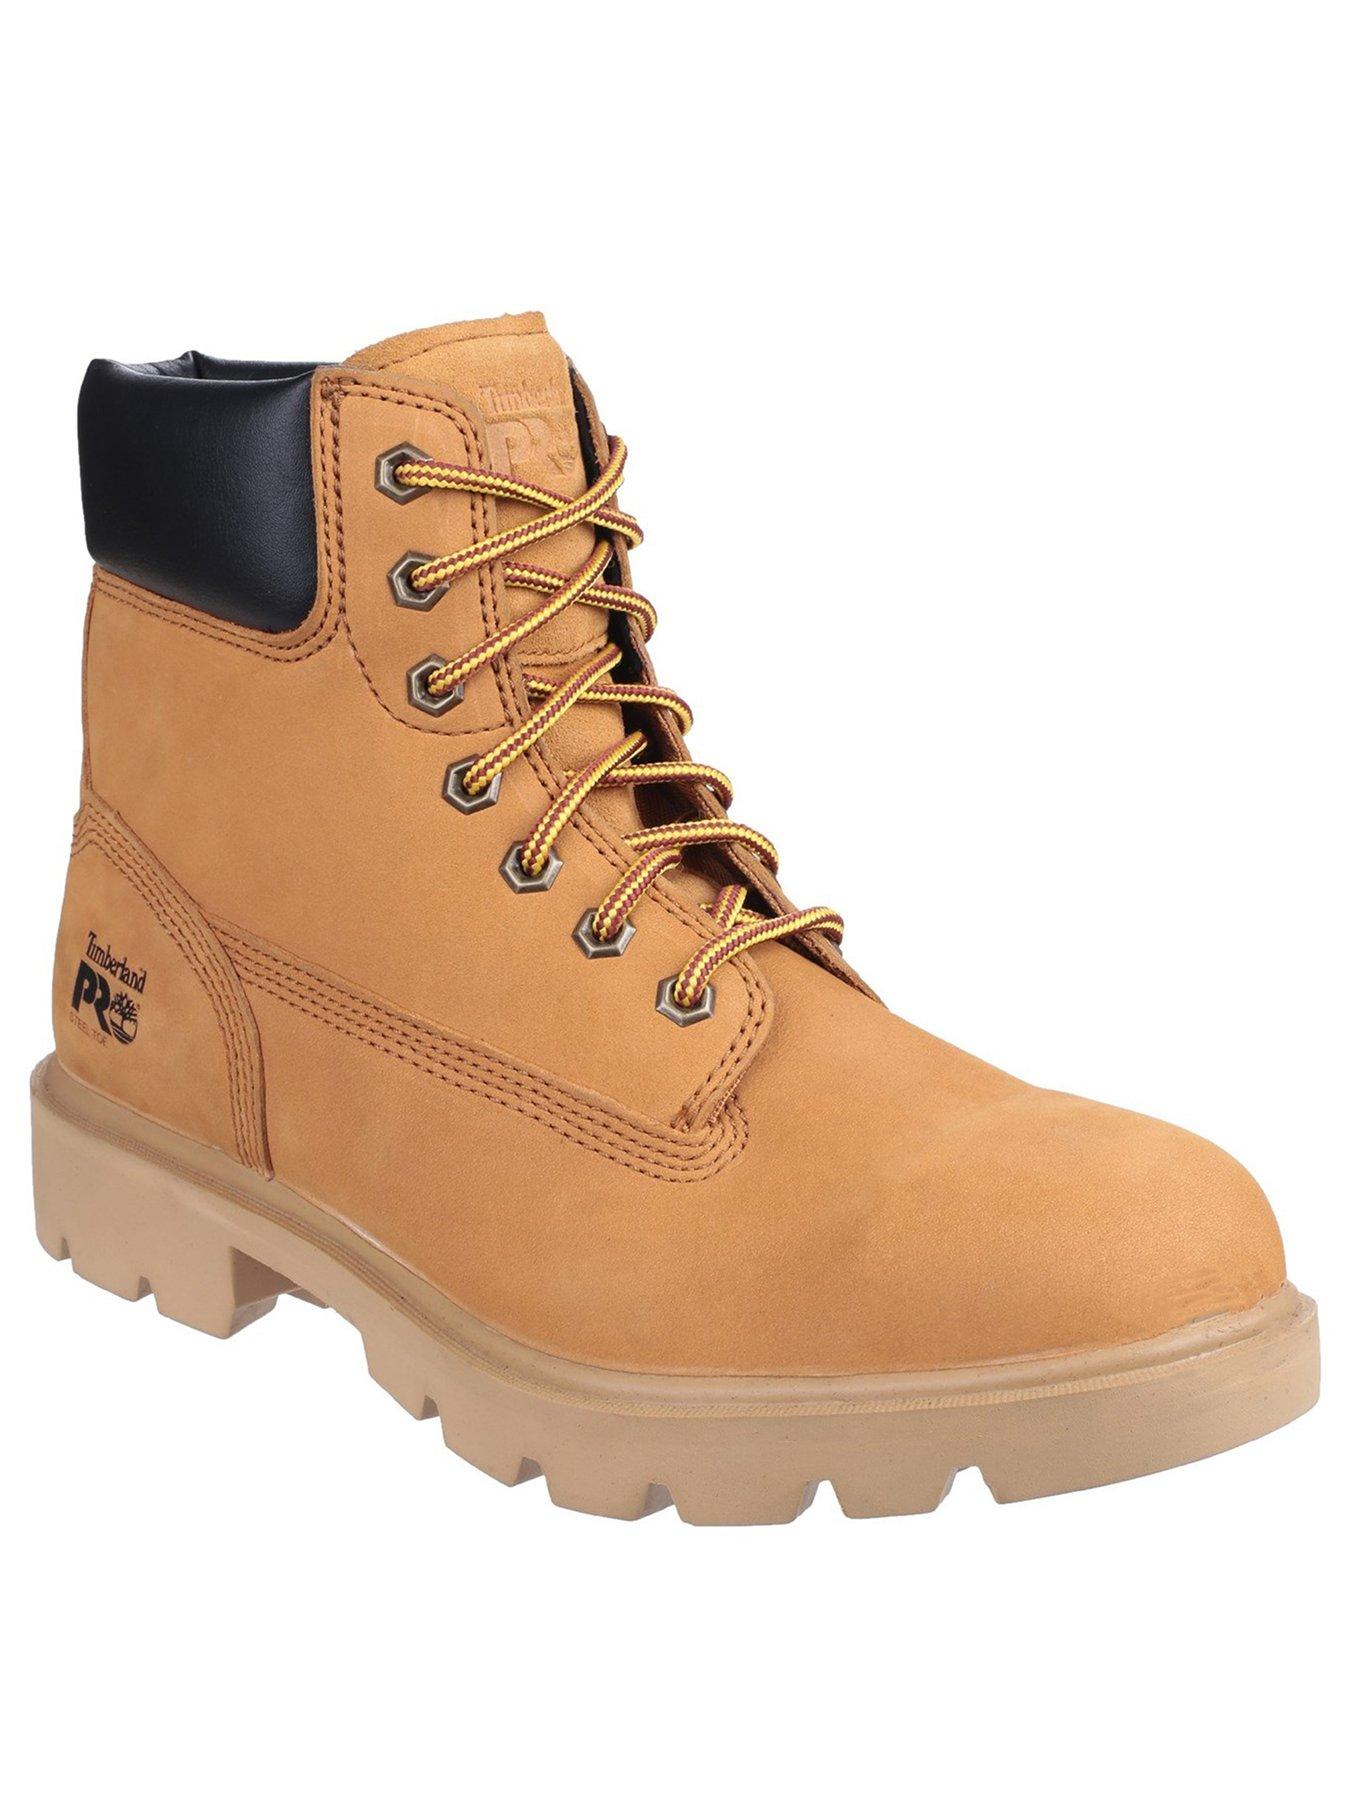 Timberland Boots \u0026 Shoes | Men's 